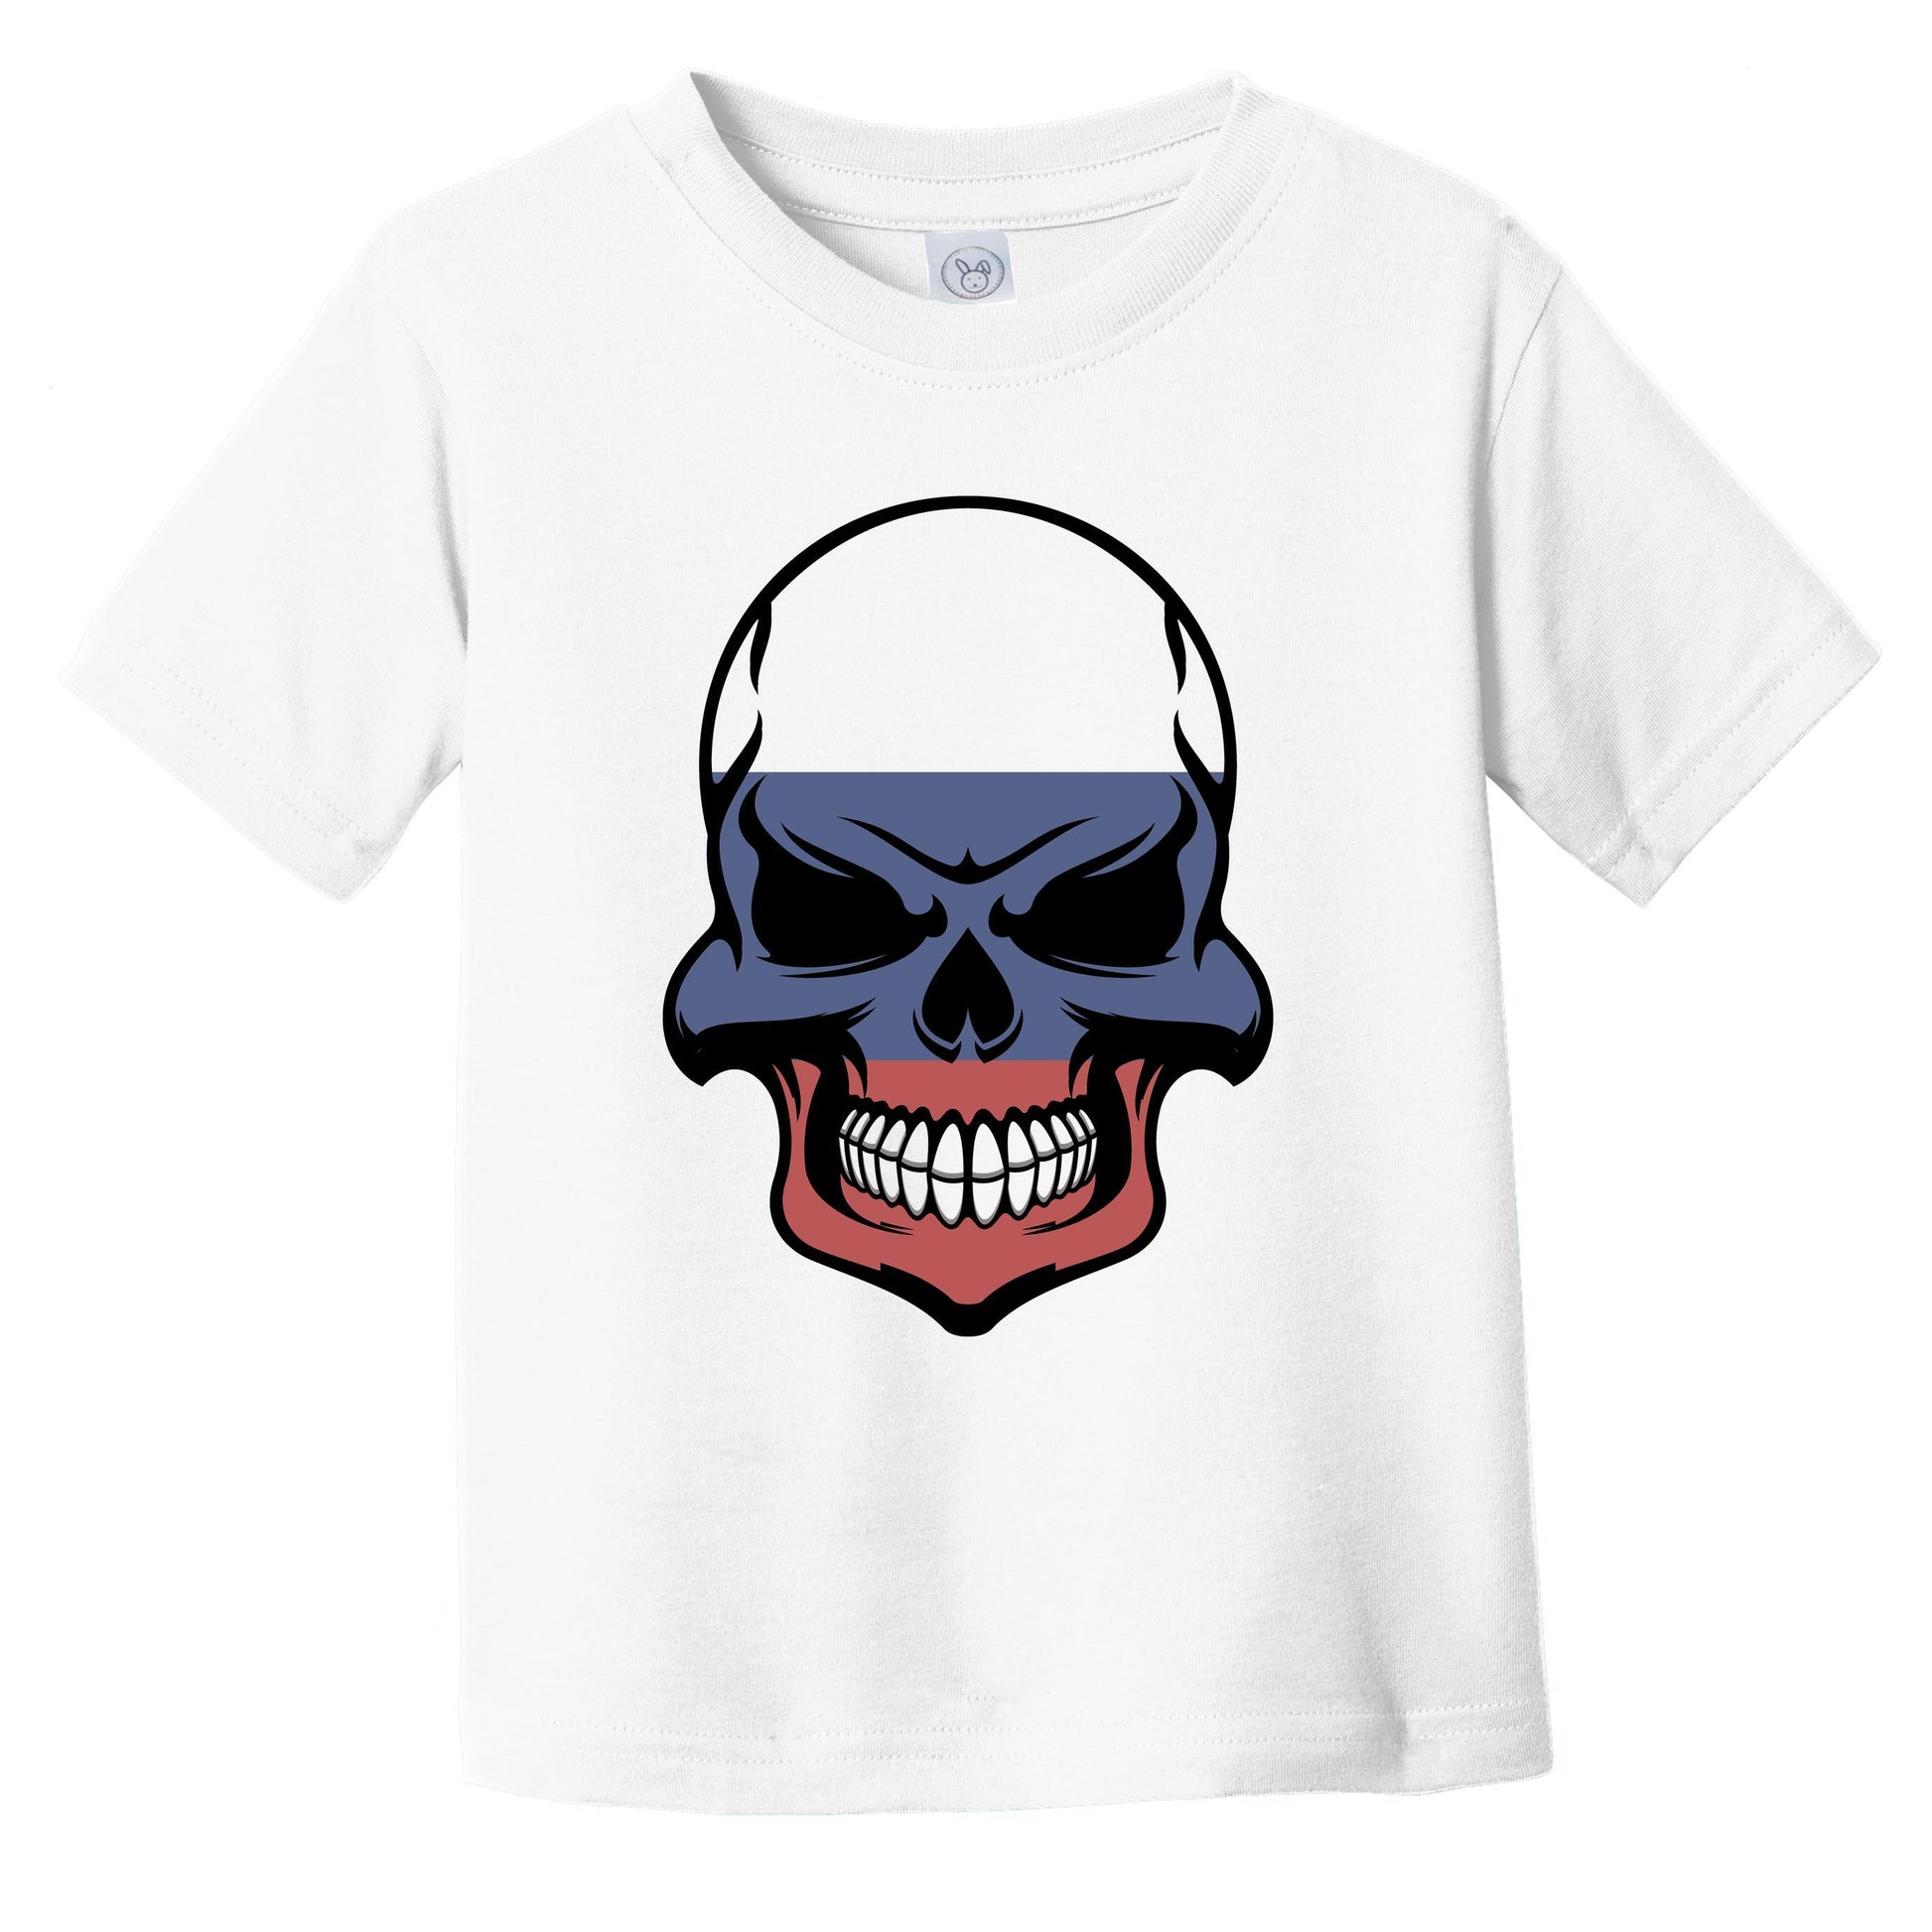 Russian Flag Skull Cool Russia Skull Infant Toddler T-Shirt